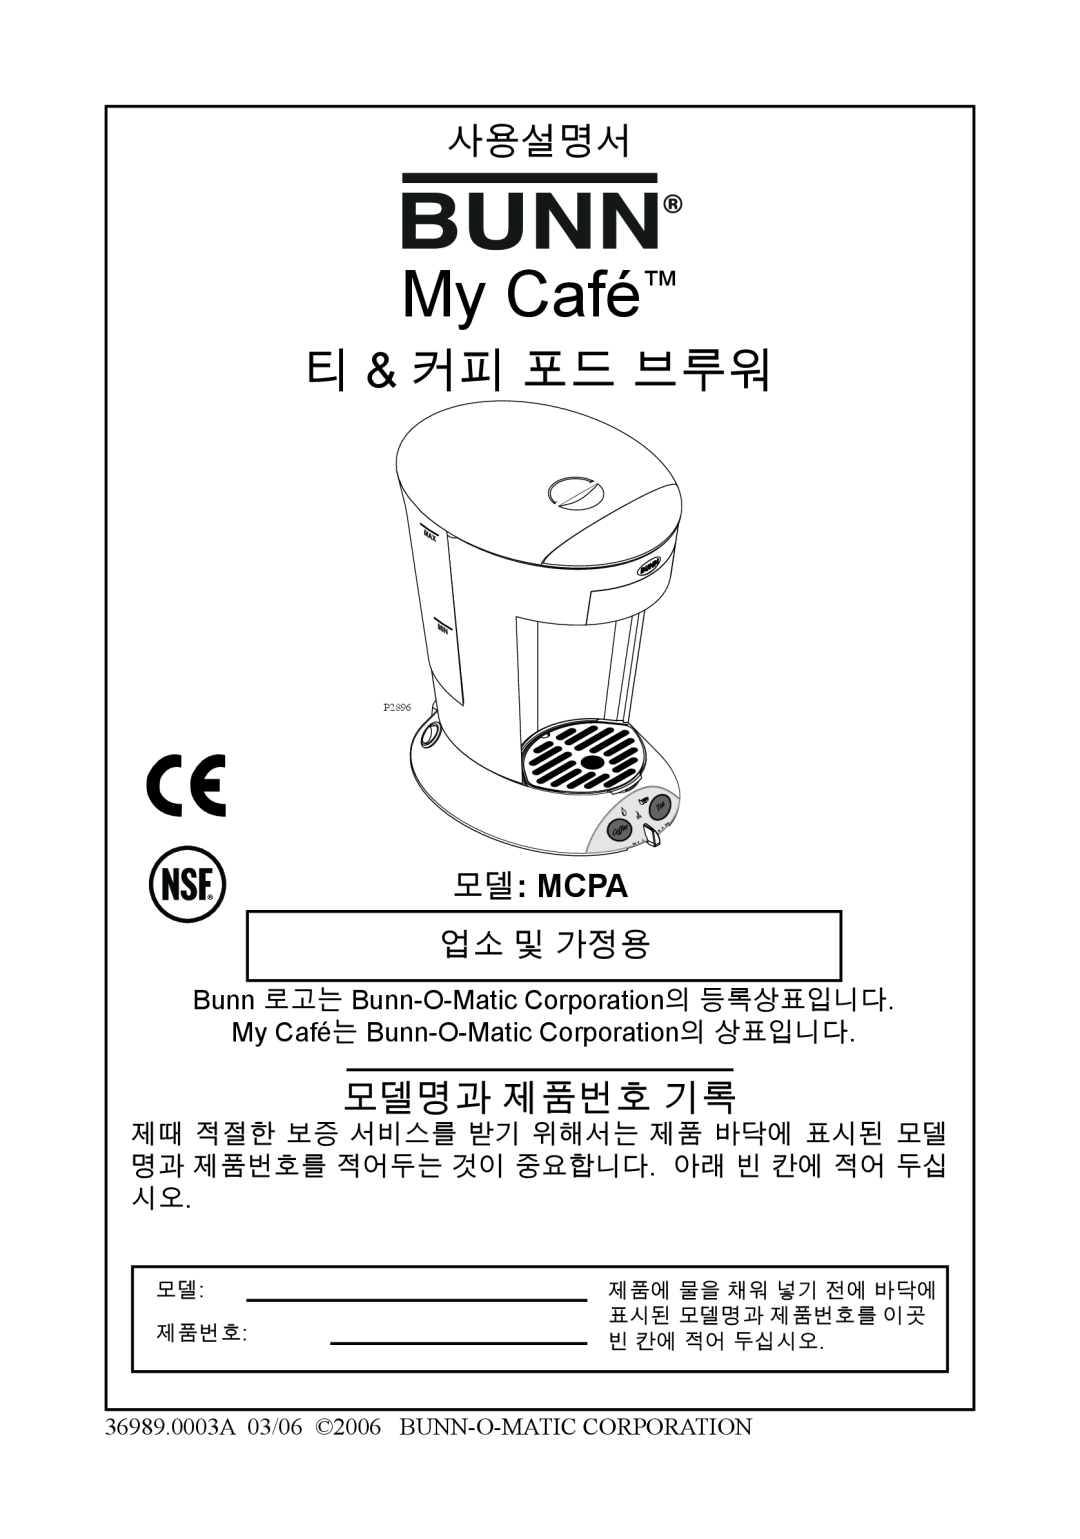 Bunn Coffemaker manual 모델 Mcpa, Bunn 로고는 Bunn-O-MaticCorporation의 등록상표입니다, My Café는 Bunn-O-MaticCorporation의 상표입니다, 사용설명서 